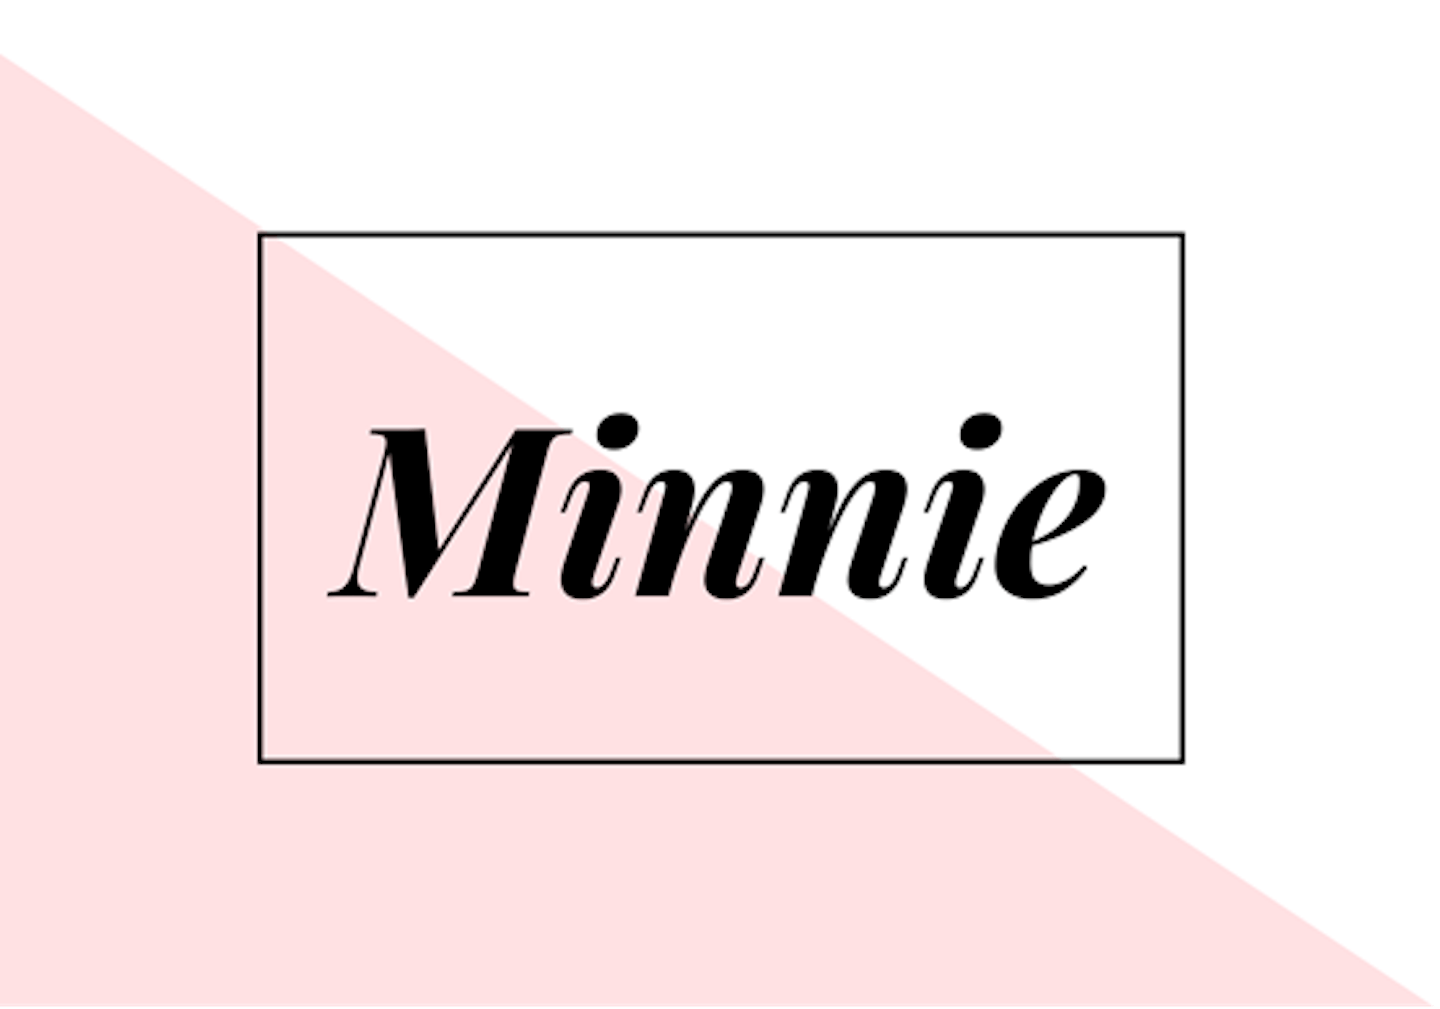 19) Minnie